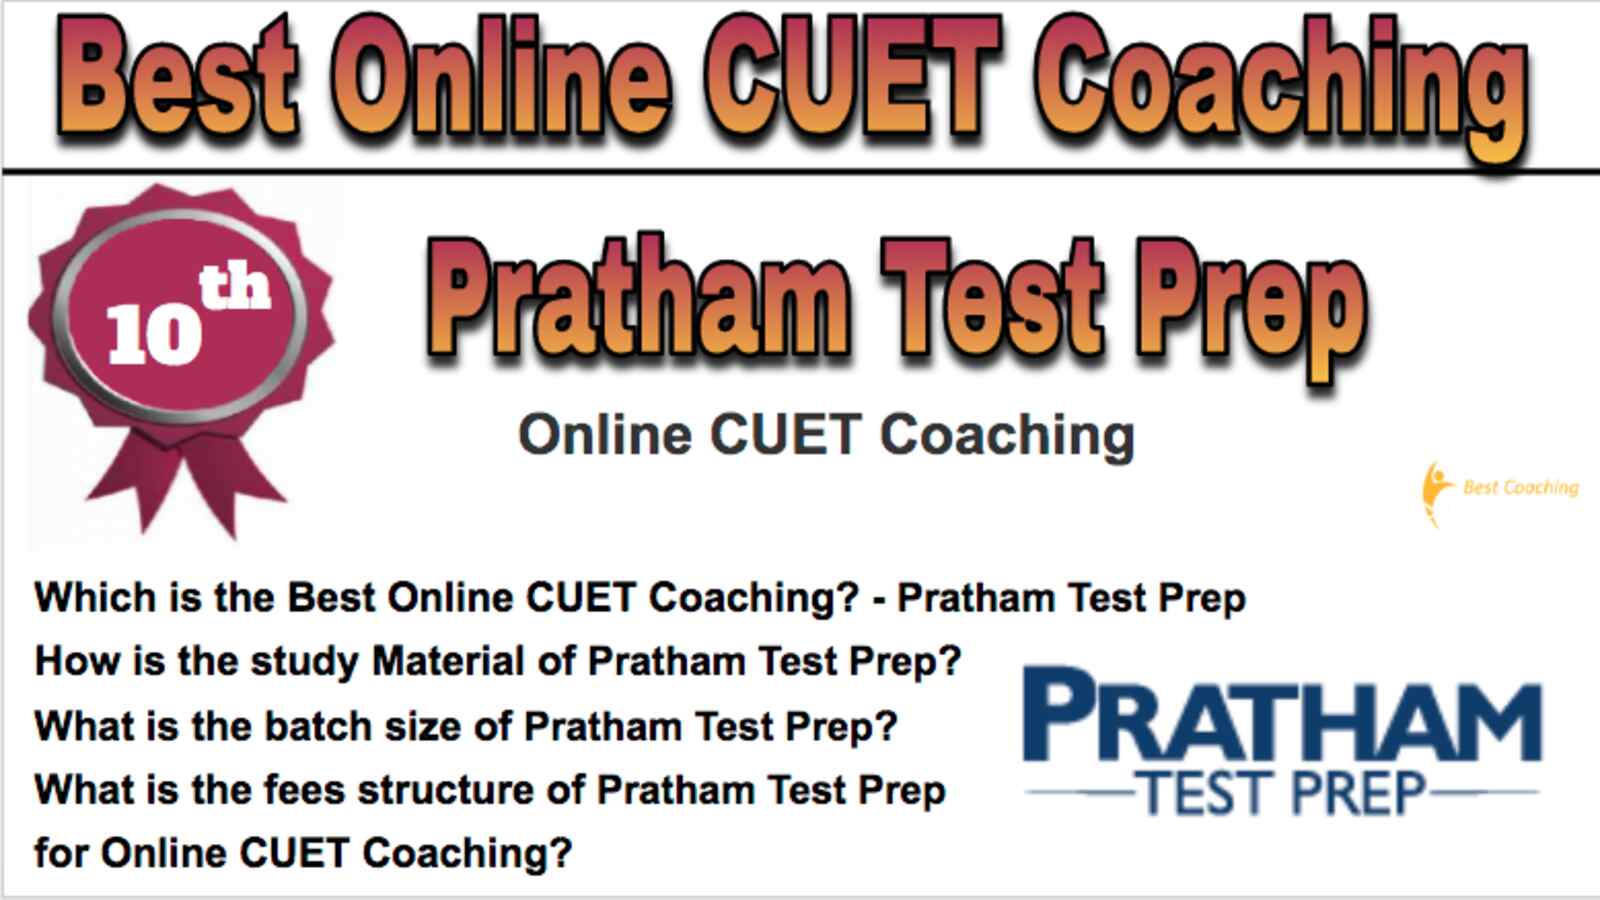 10th Best Online CUET Coaching